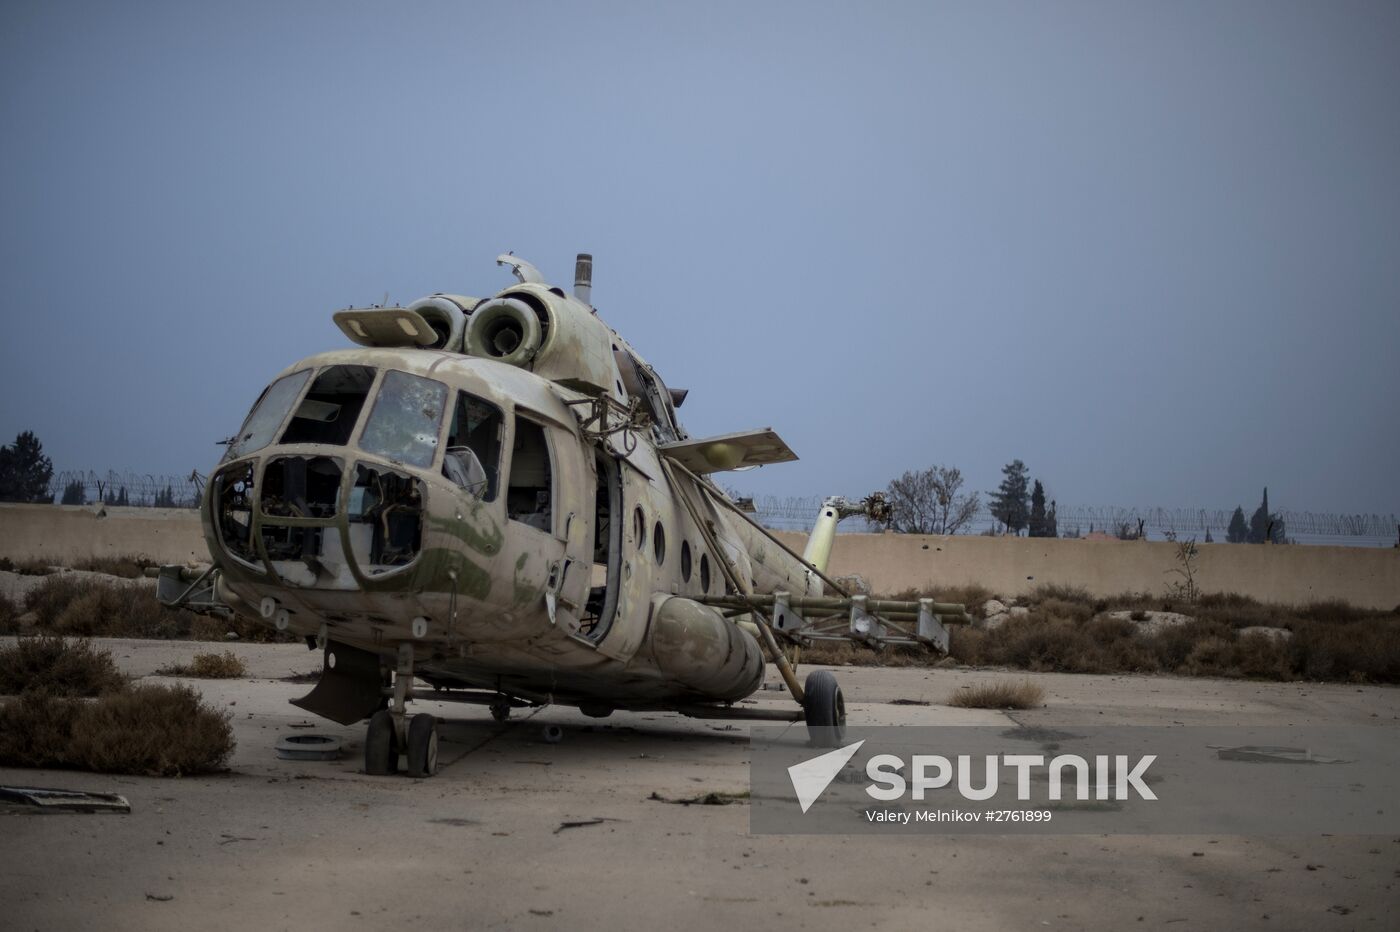 Syrian army captures Marj al-Sultan military airbase